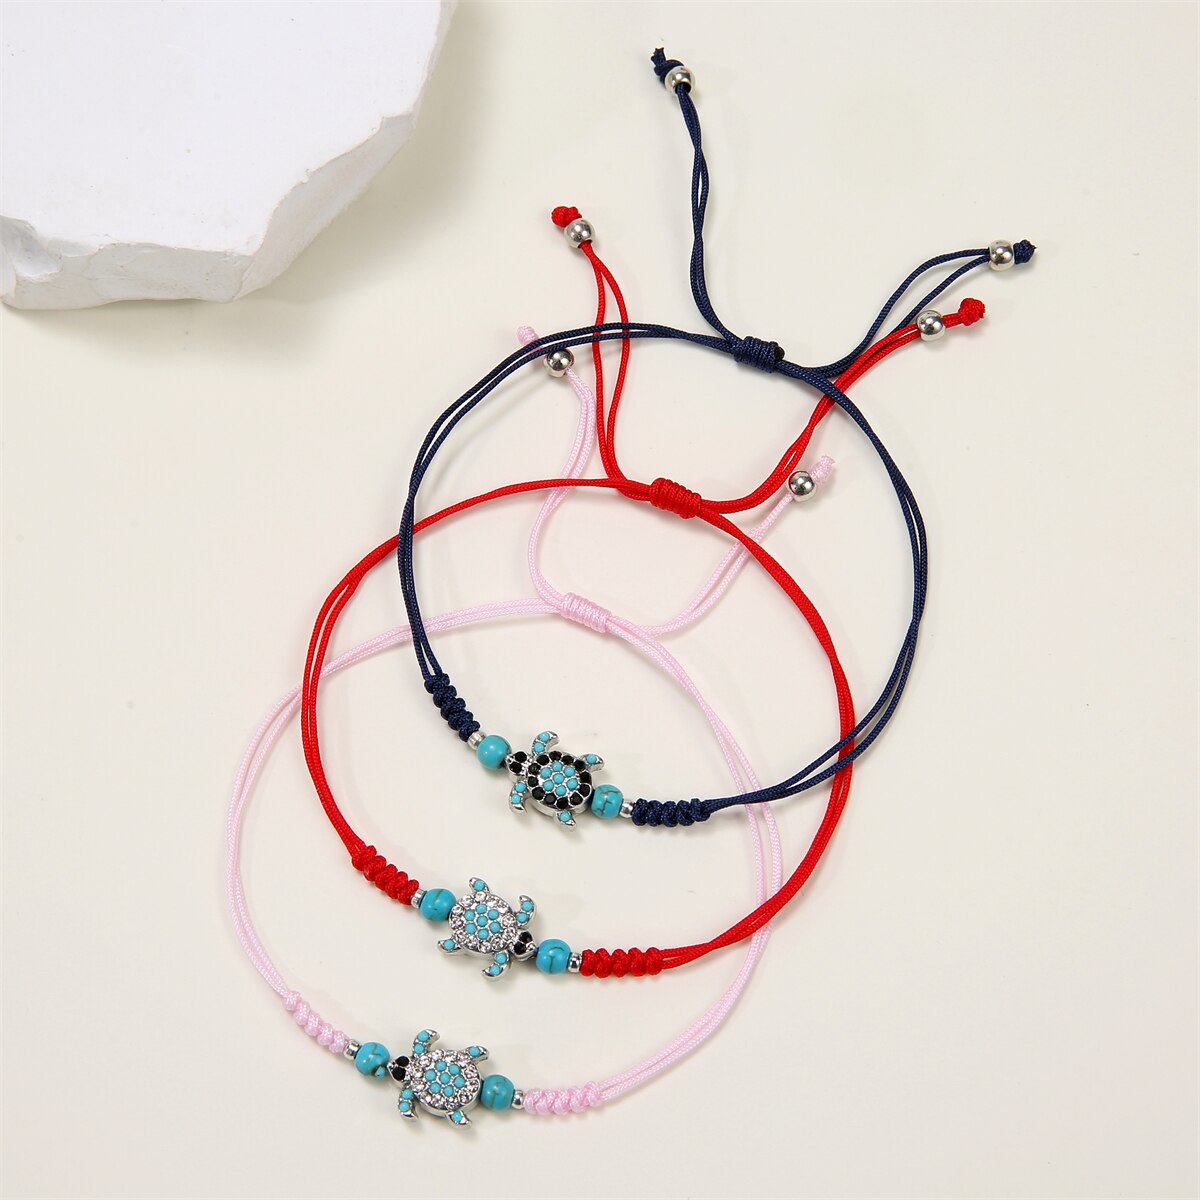 Boho 12pcs/lot Ocean Turtle Charms Bracelets Handmade Adjustable Rope Chain Yoga Wristband for Women Holiday Jewelry